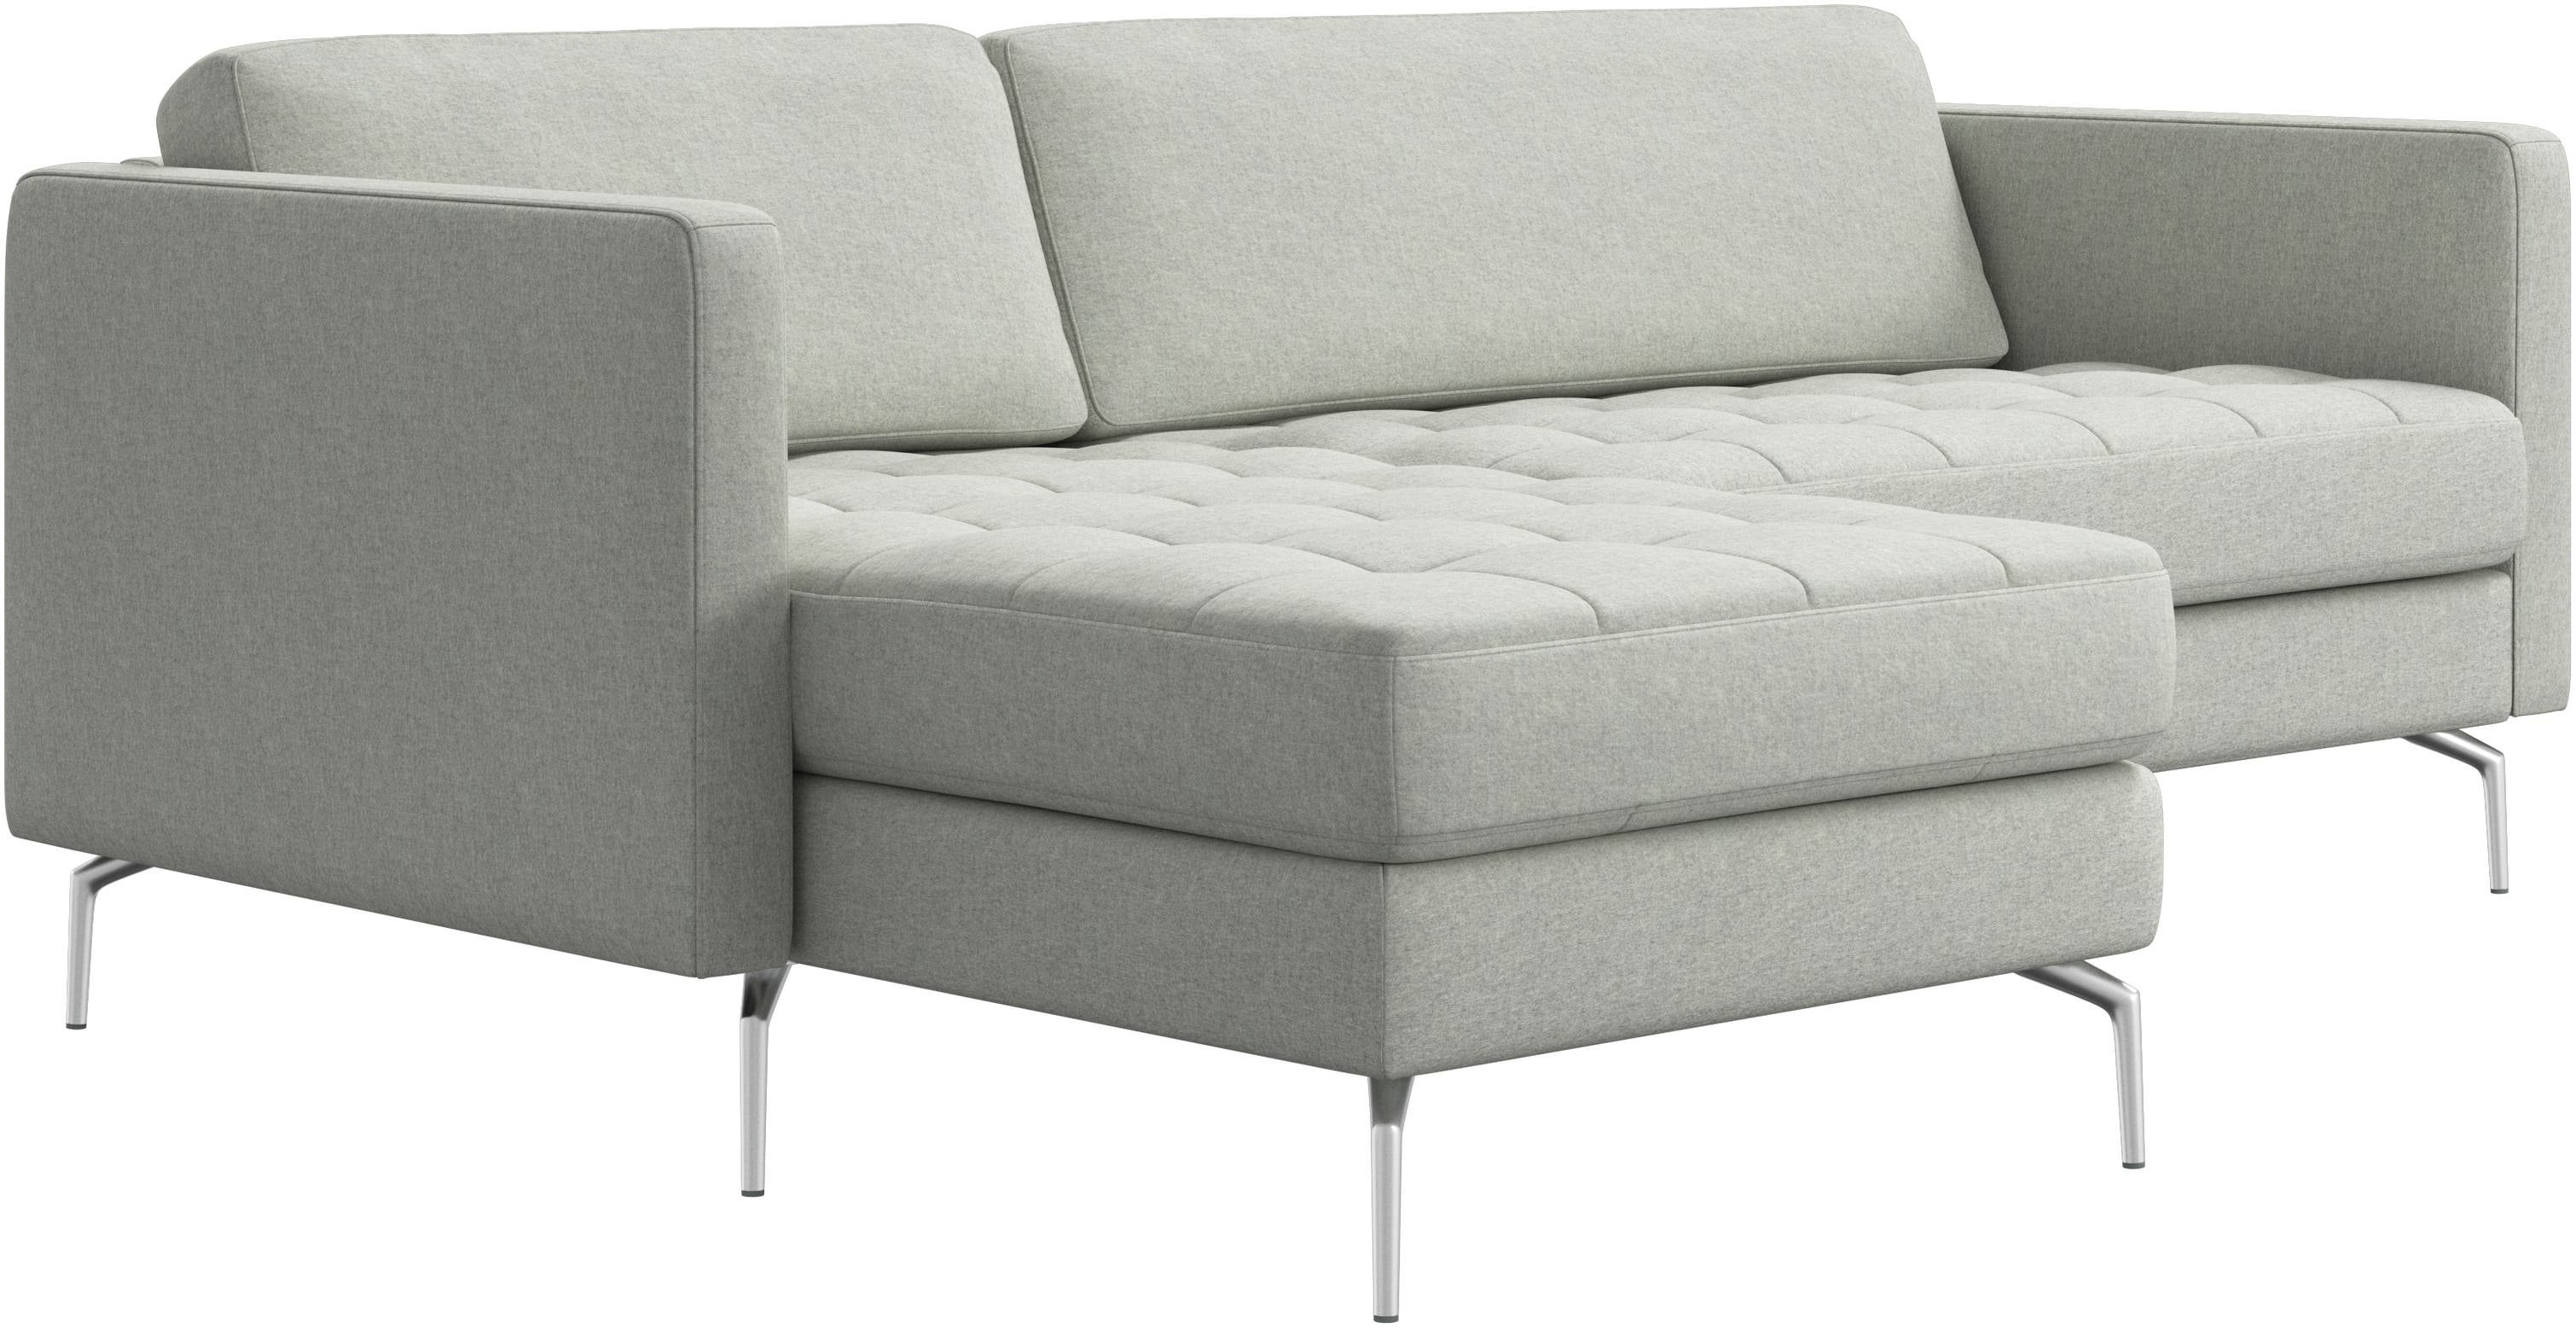 The Osaka sofa | Danish furniture design | BoConcept